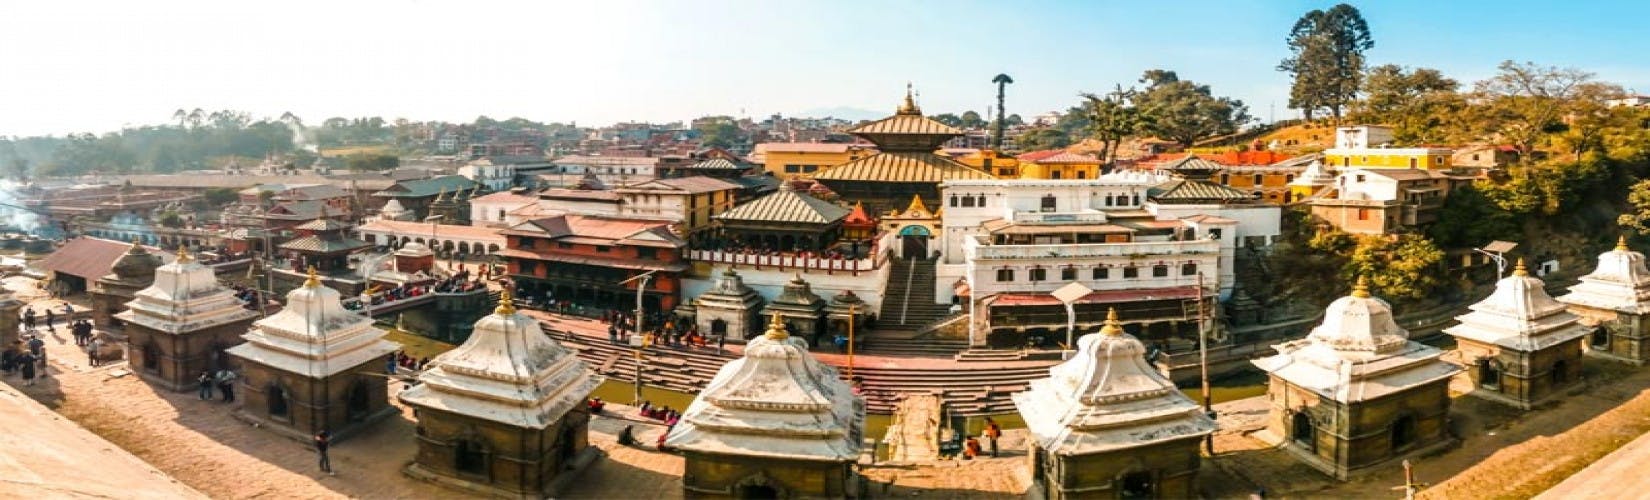 Things to see during Kathmandu city tour